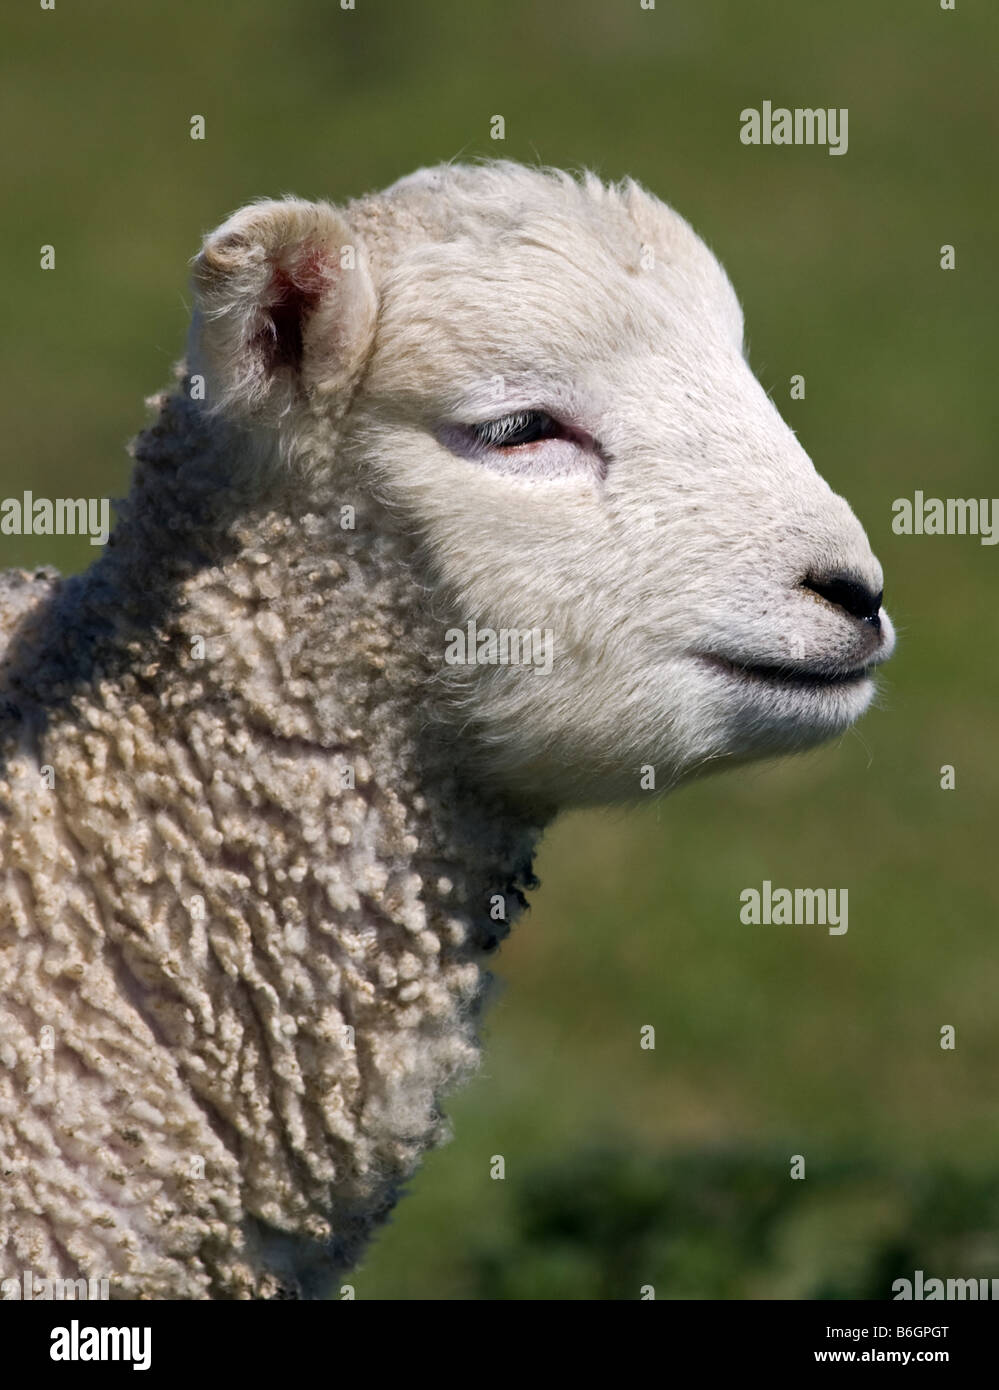 White Lamb profile Stock Photo